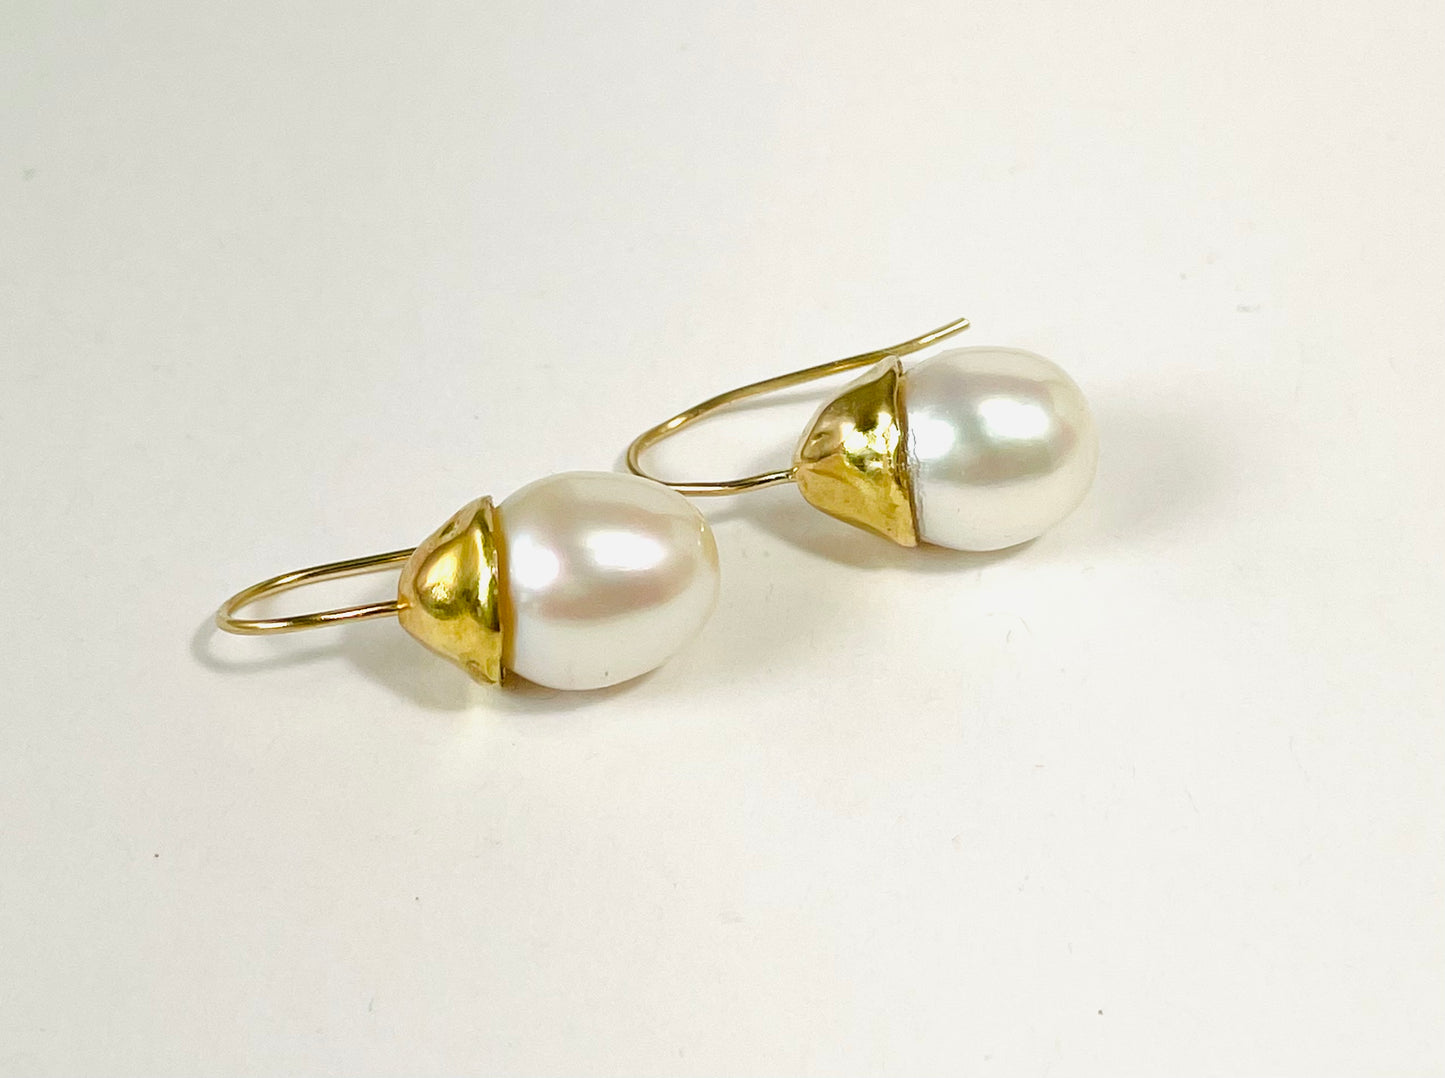 Baroque pearl earrings in handmade 14k gold setting